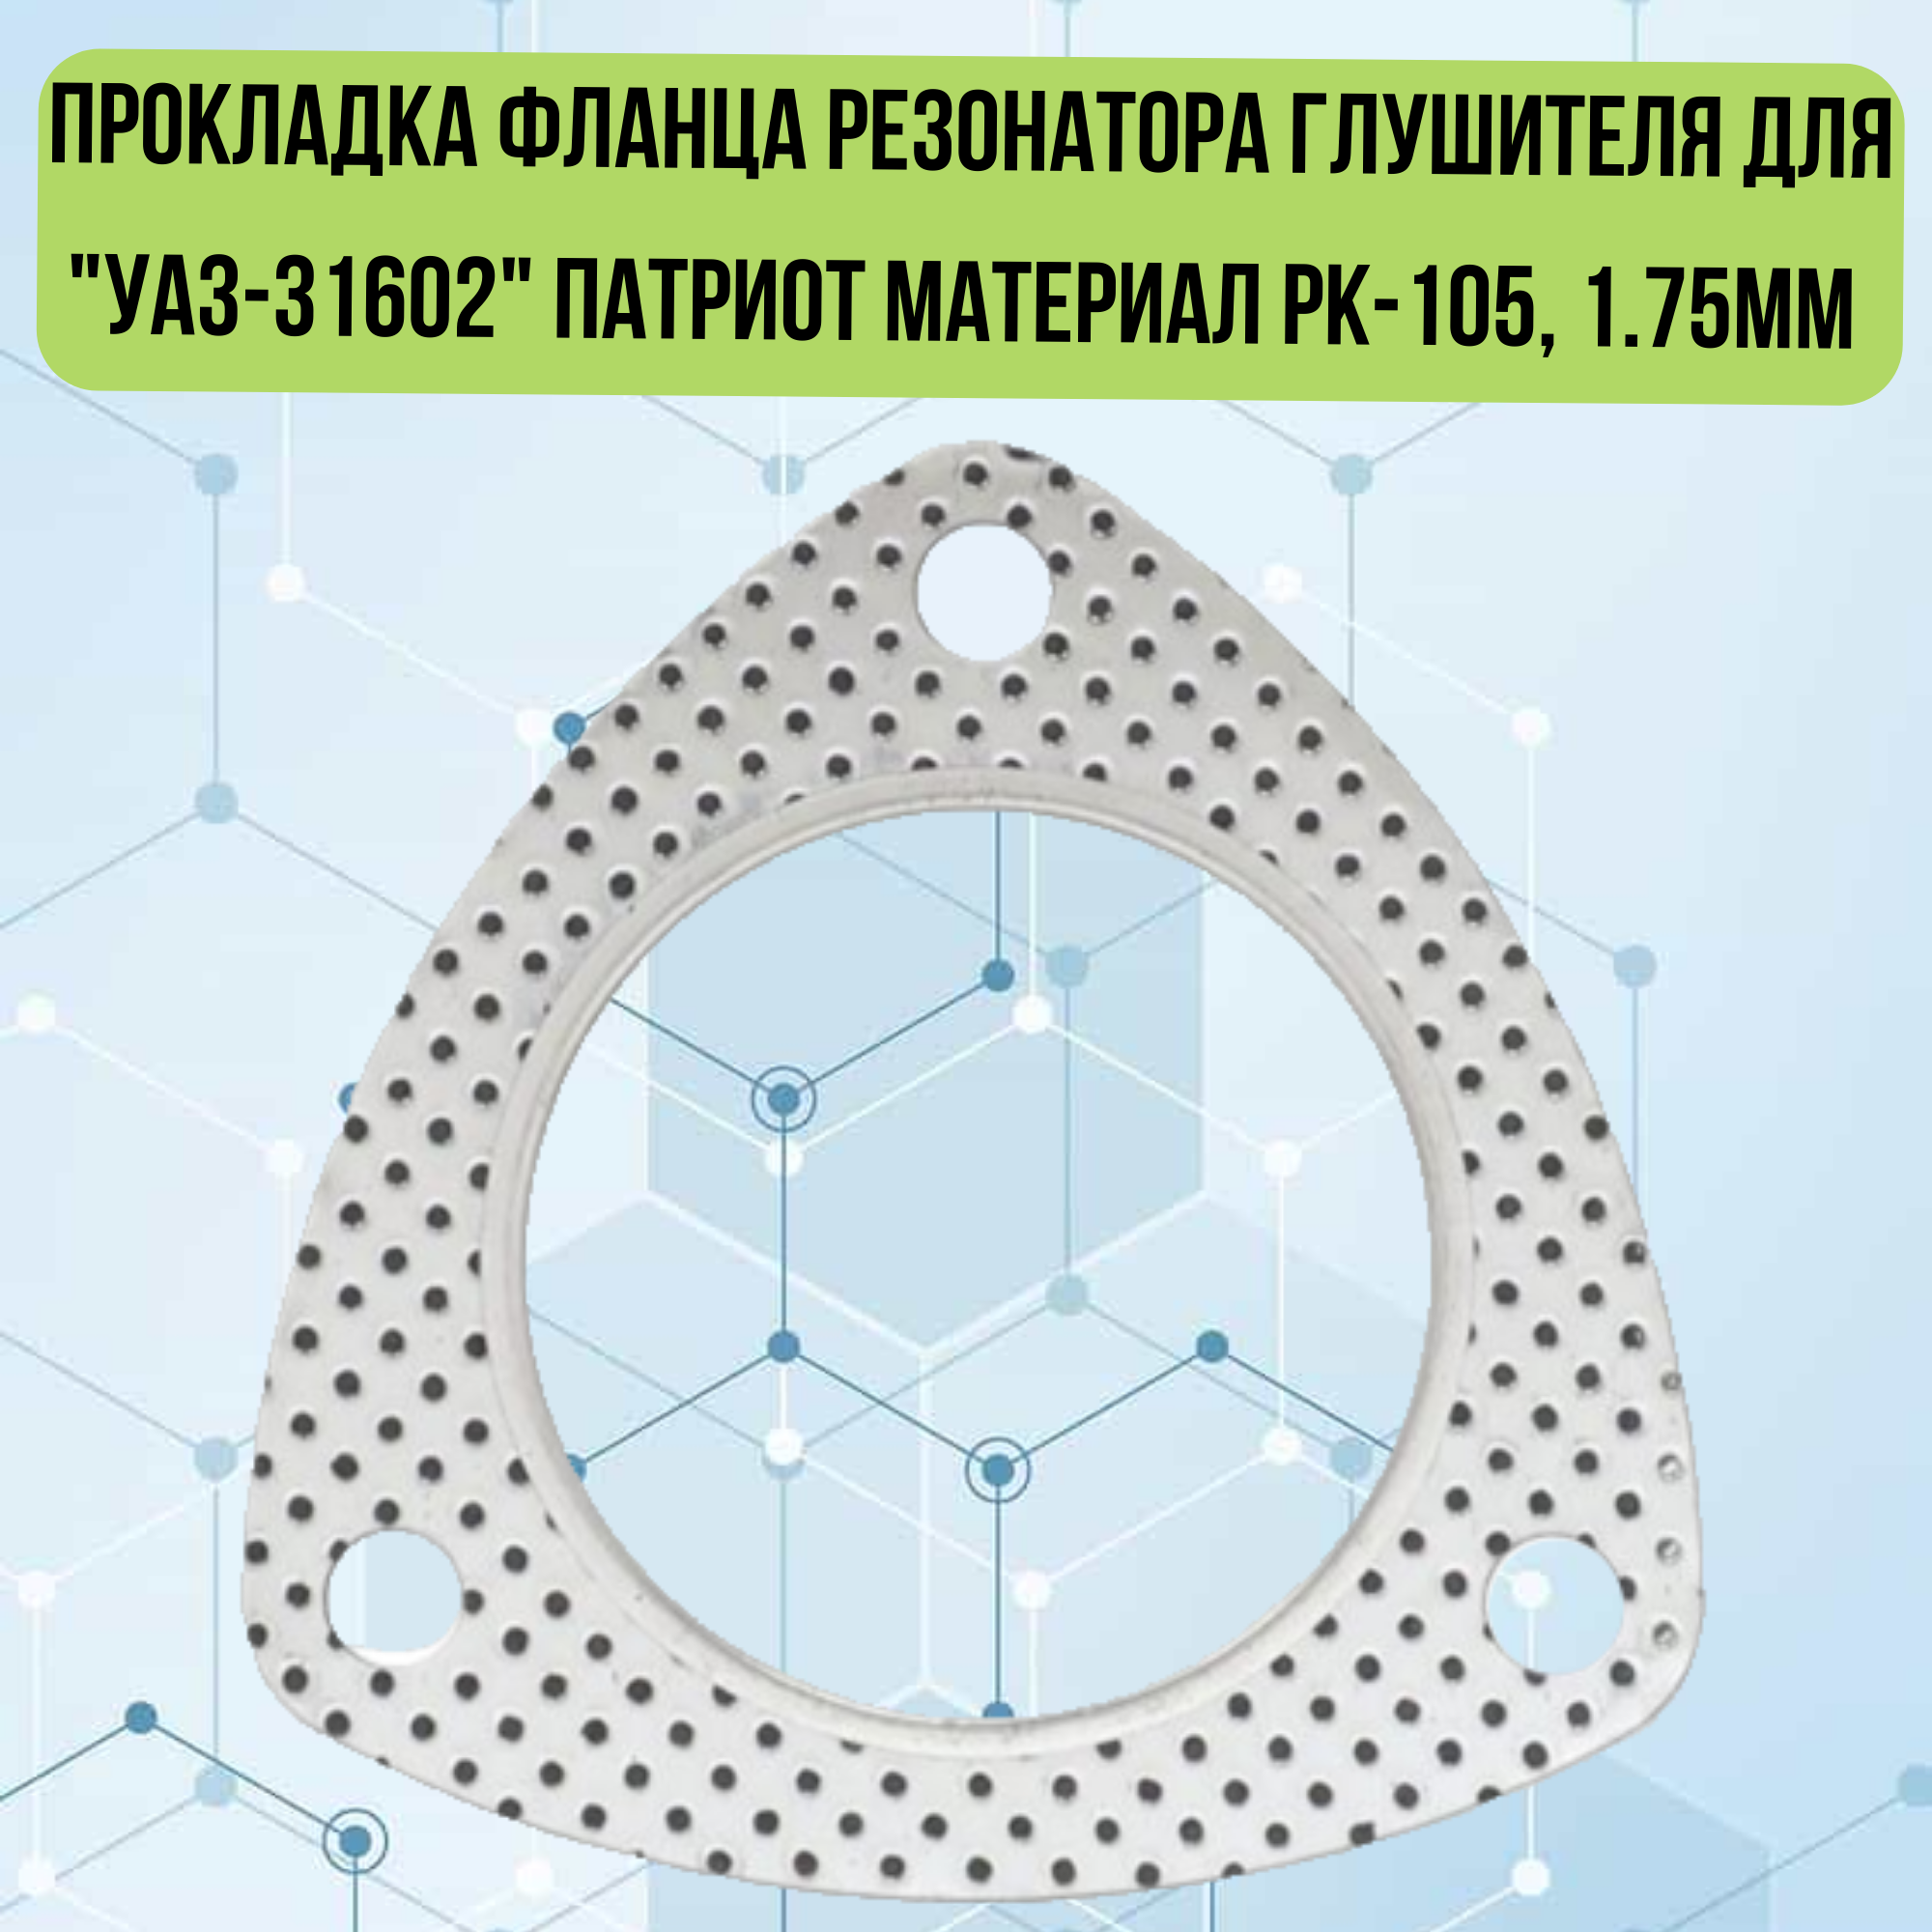 Прокладка фланца резонатора глушителя для "УАЗ-31602" Патриот материал РК-105, 1.75мм KV-31602-1203088-105